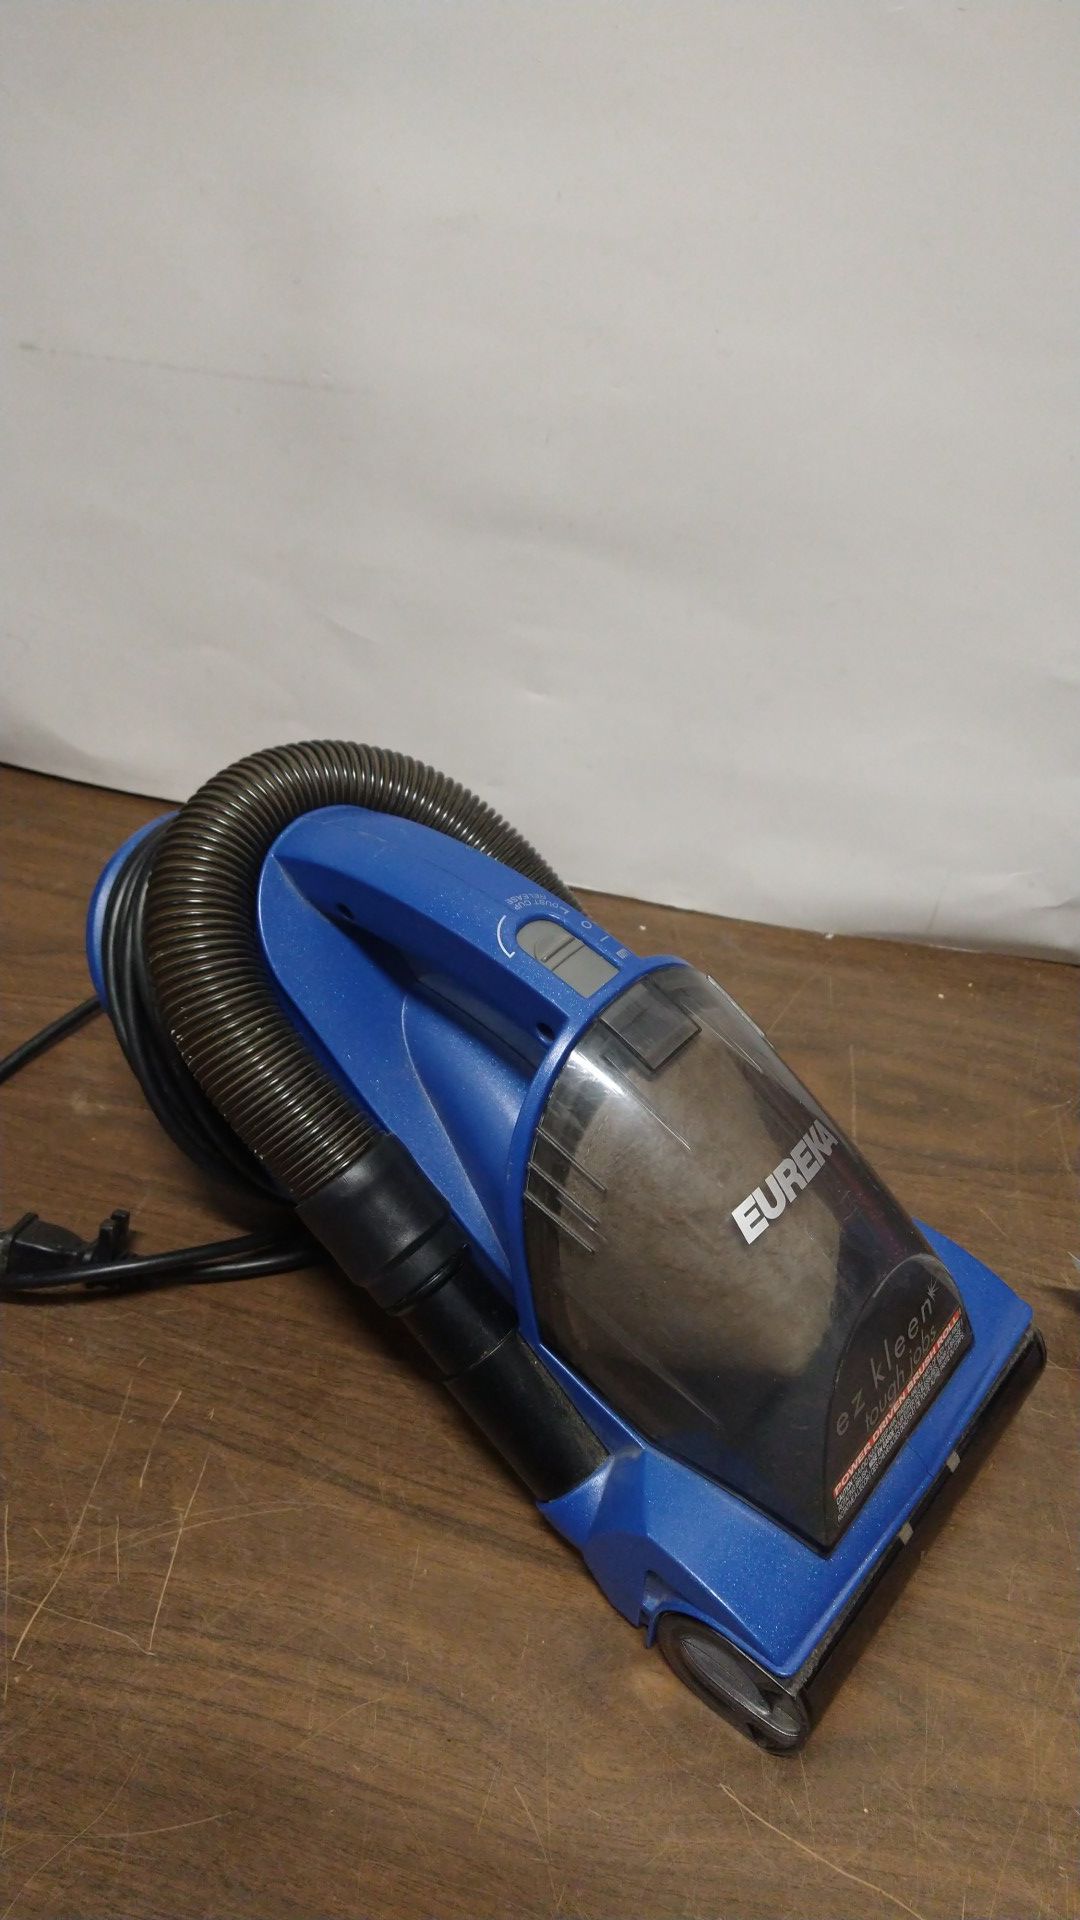 Eureka handheld vacuum cleaner corder ez clean